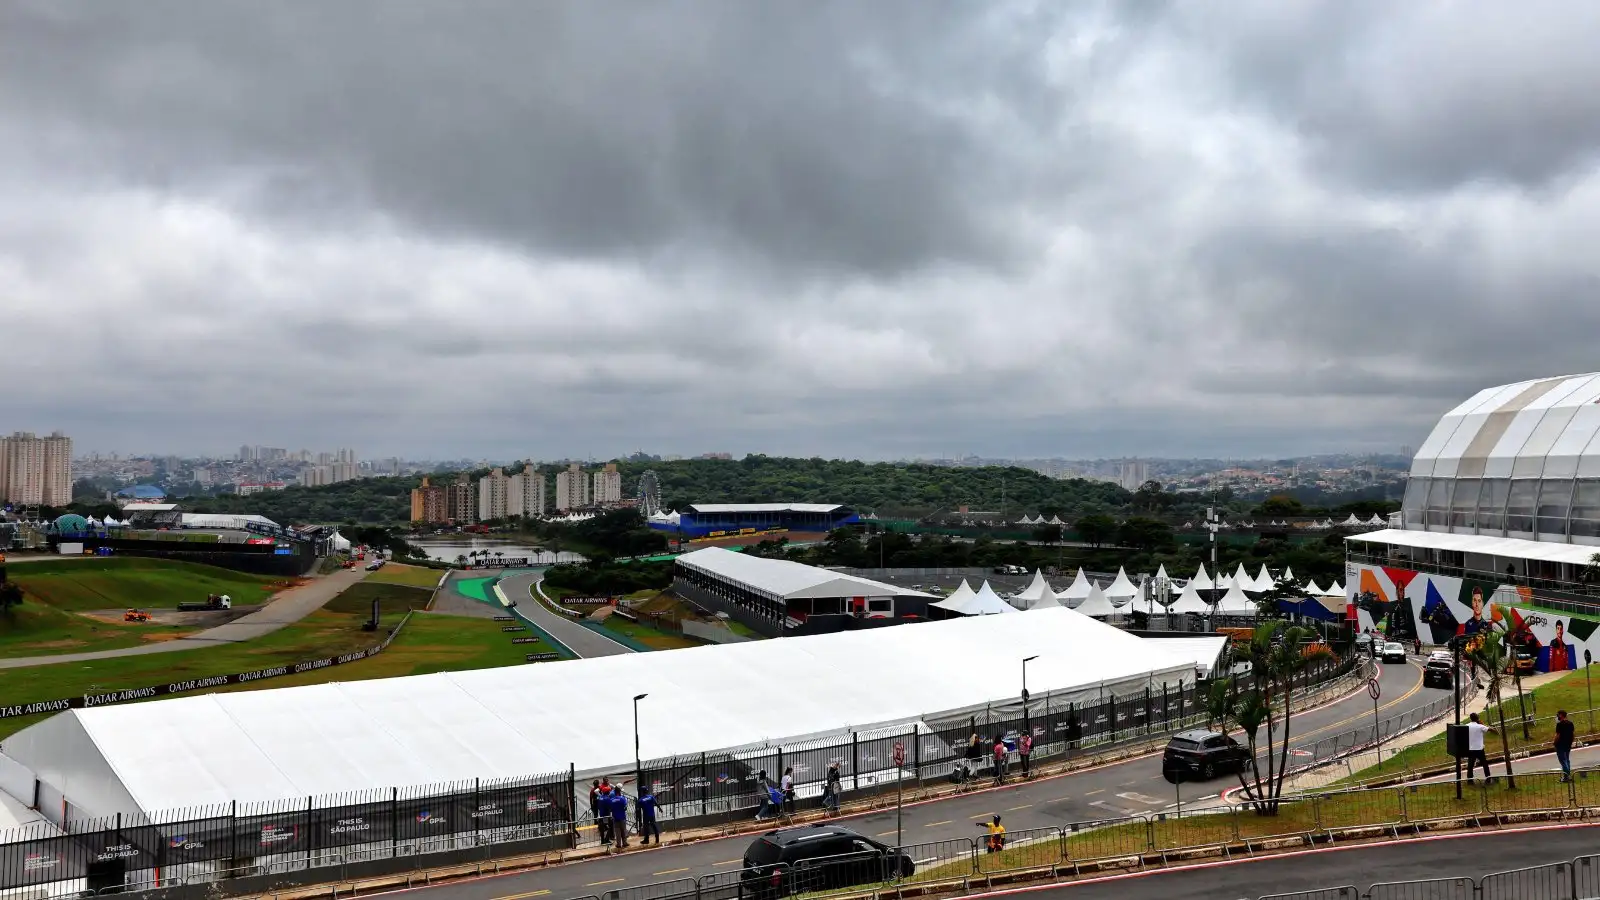 Panoramic view of the incredible Interlagos circuit, home of the Brazilian Grand Prix